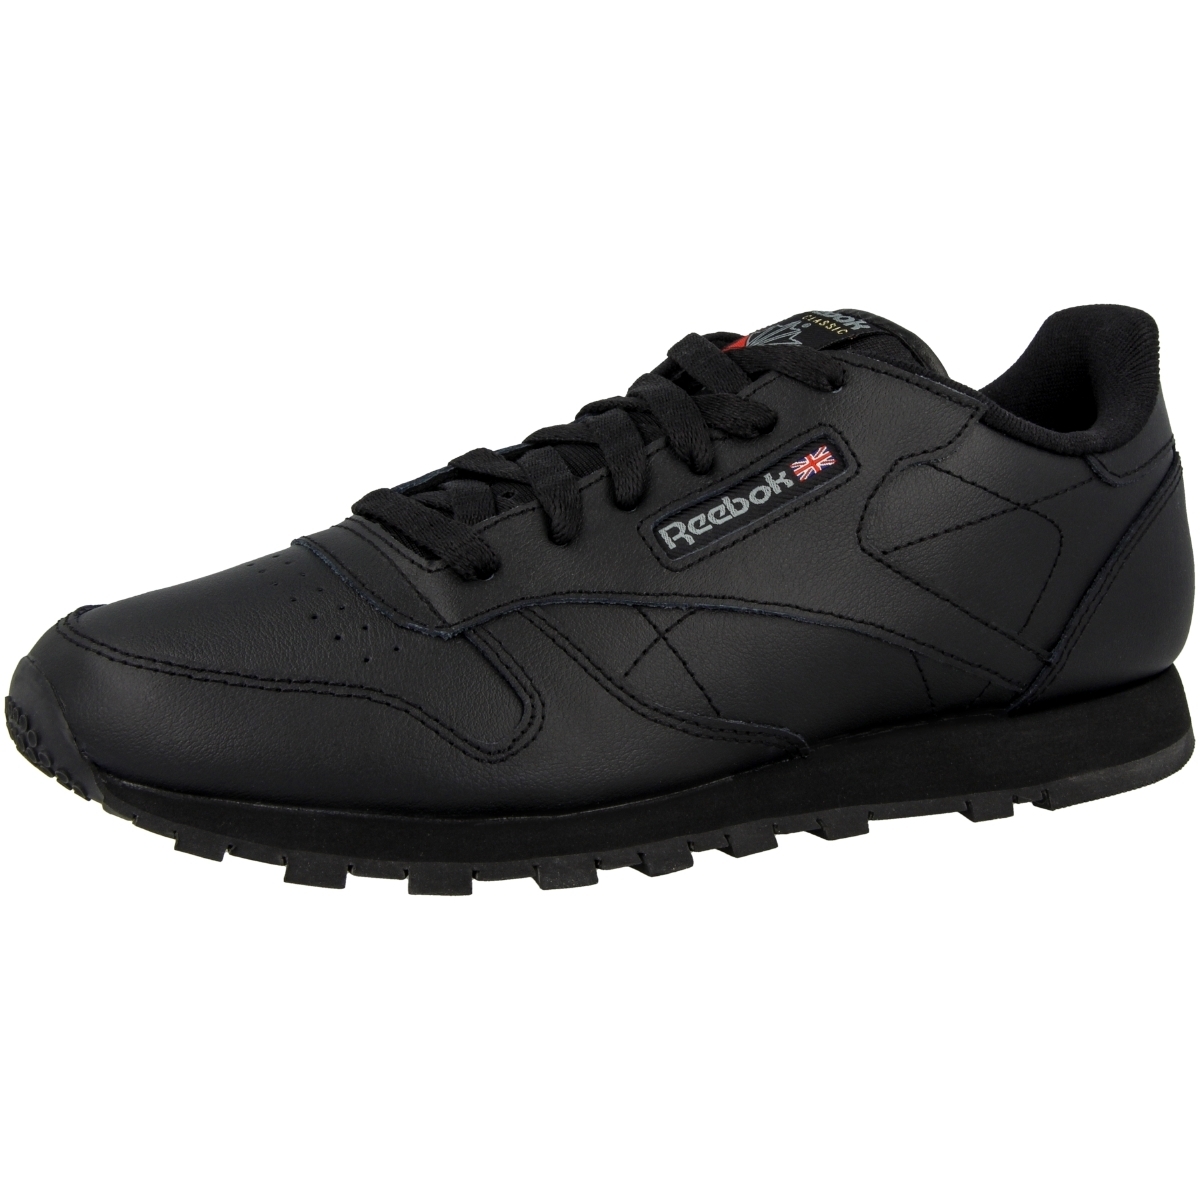 Reebok Classic Leather (GS) Schuhe schwarz